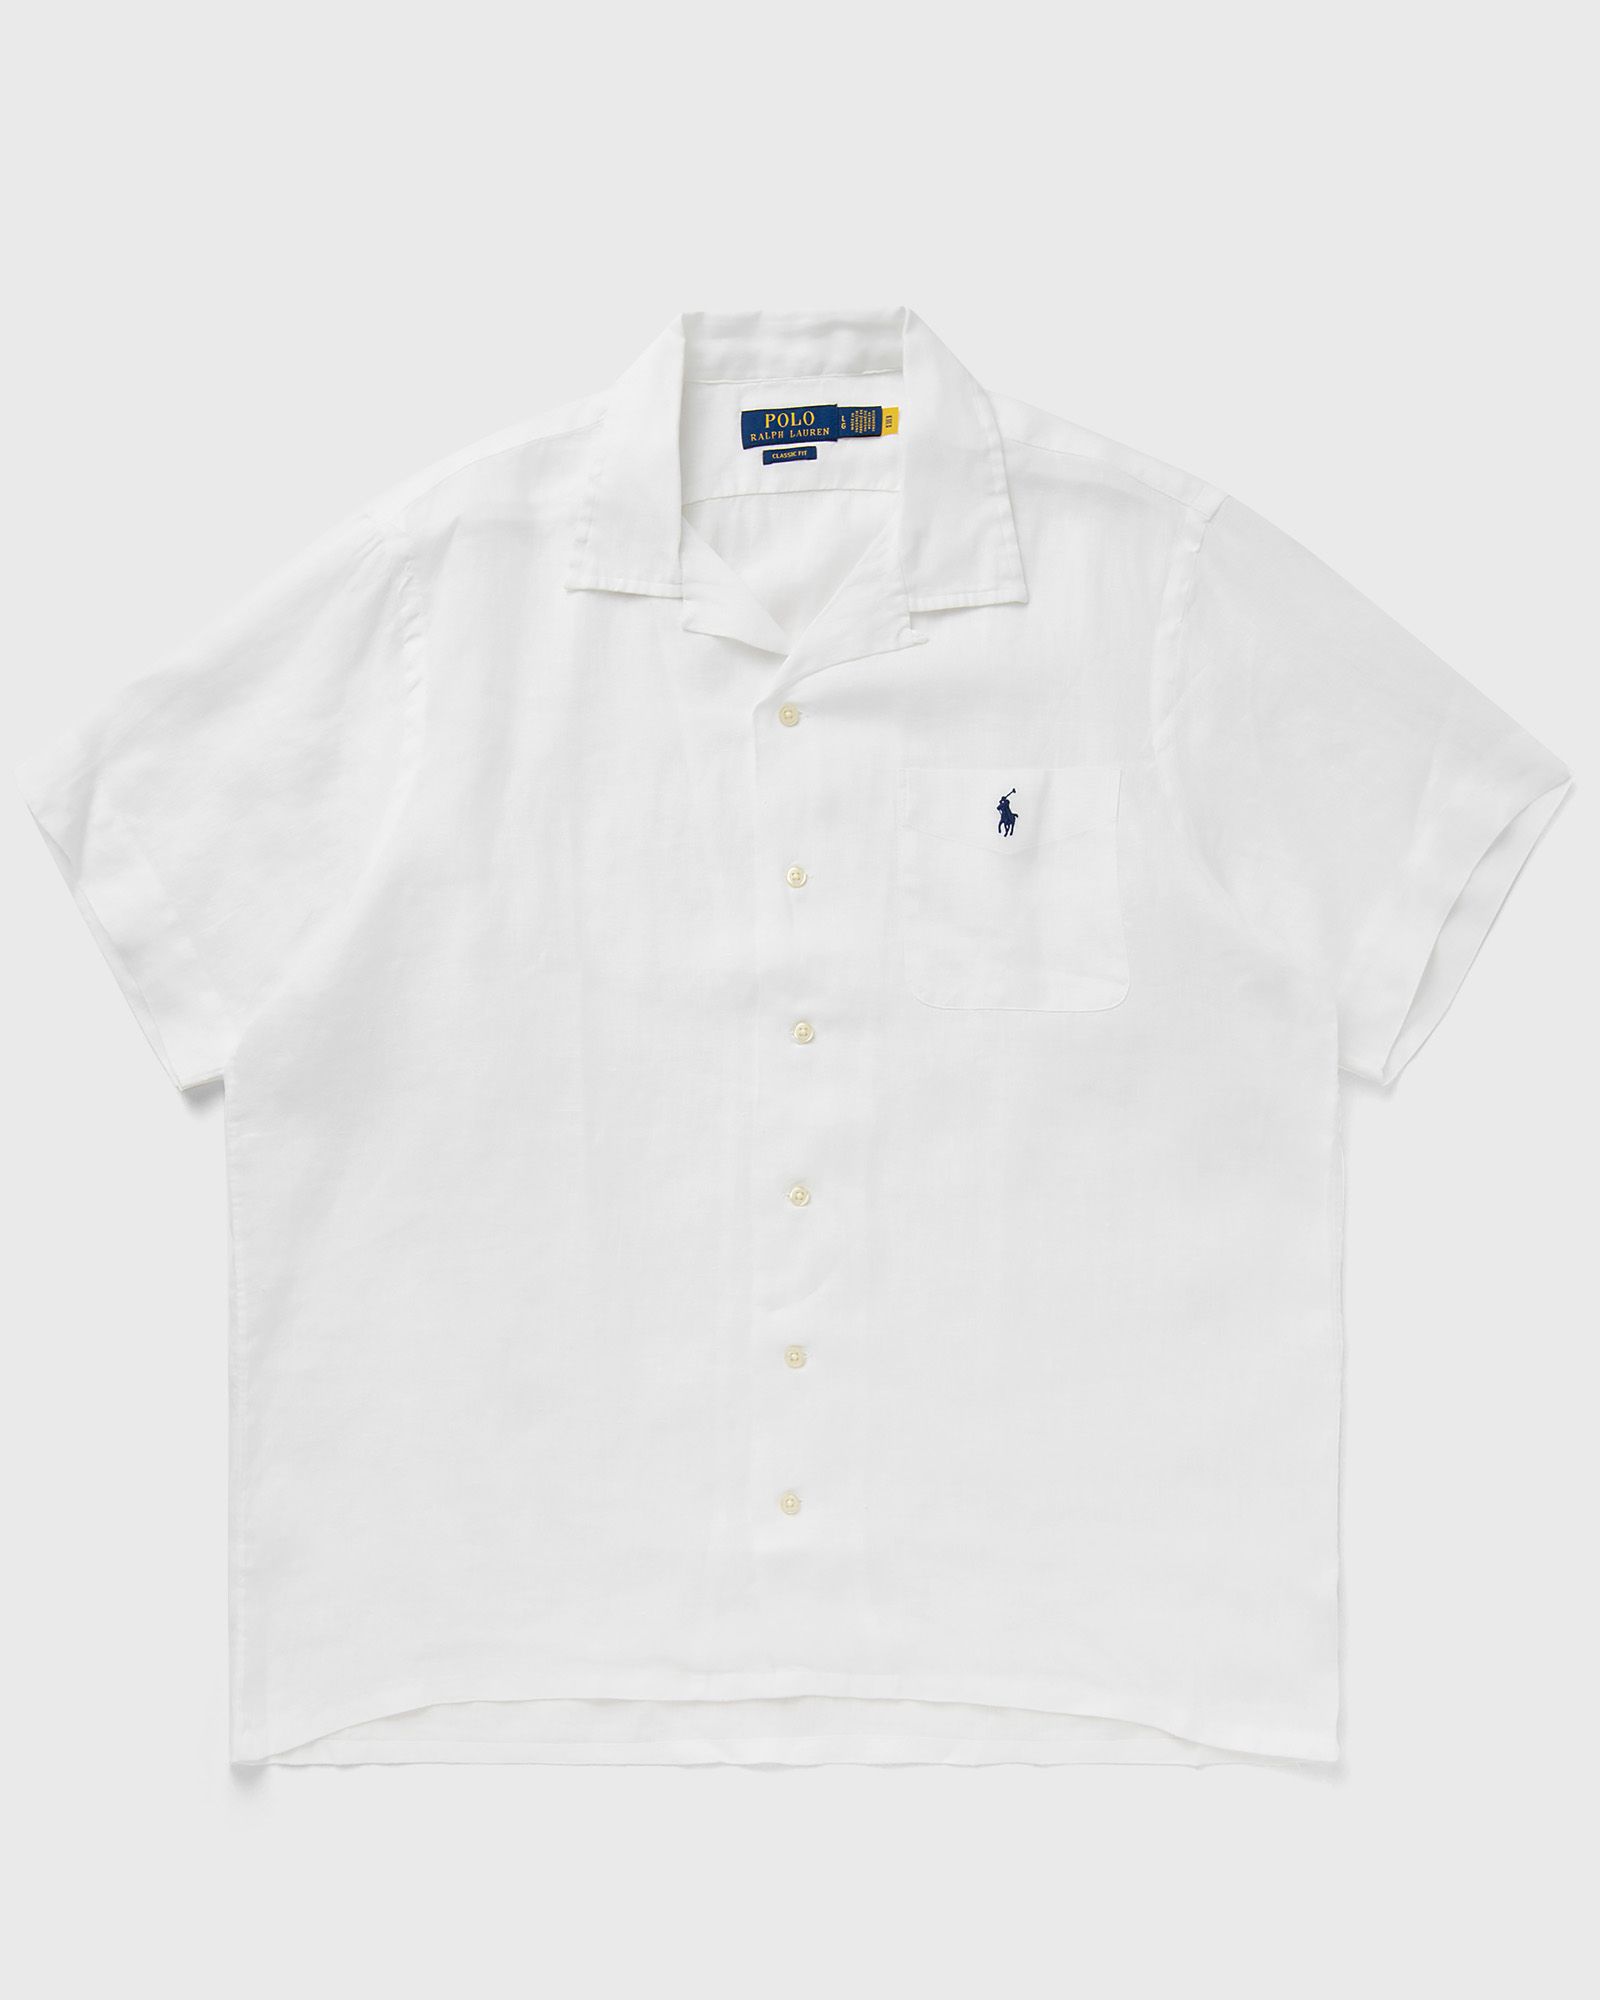 Polo Ralph Lauren - short sleeve-sport shirt men shortsleeves white in größe:xxl